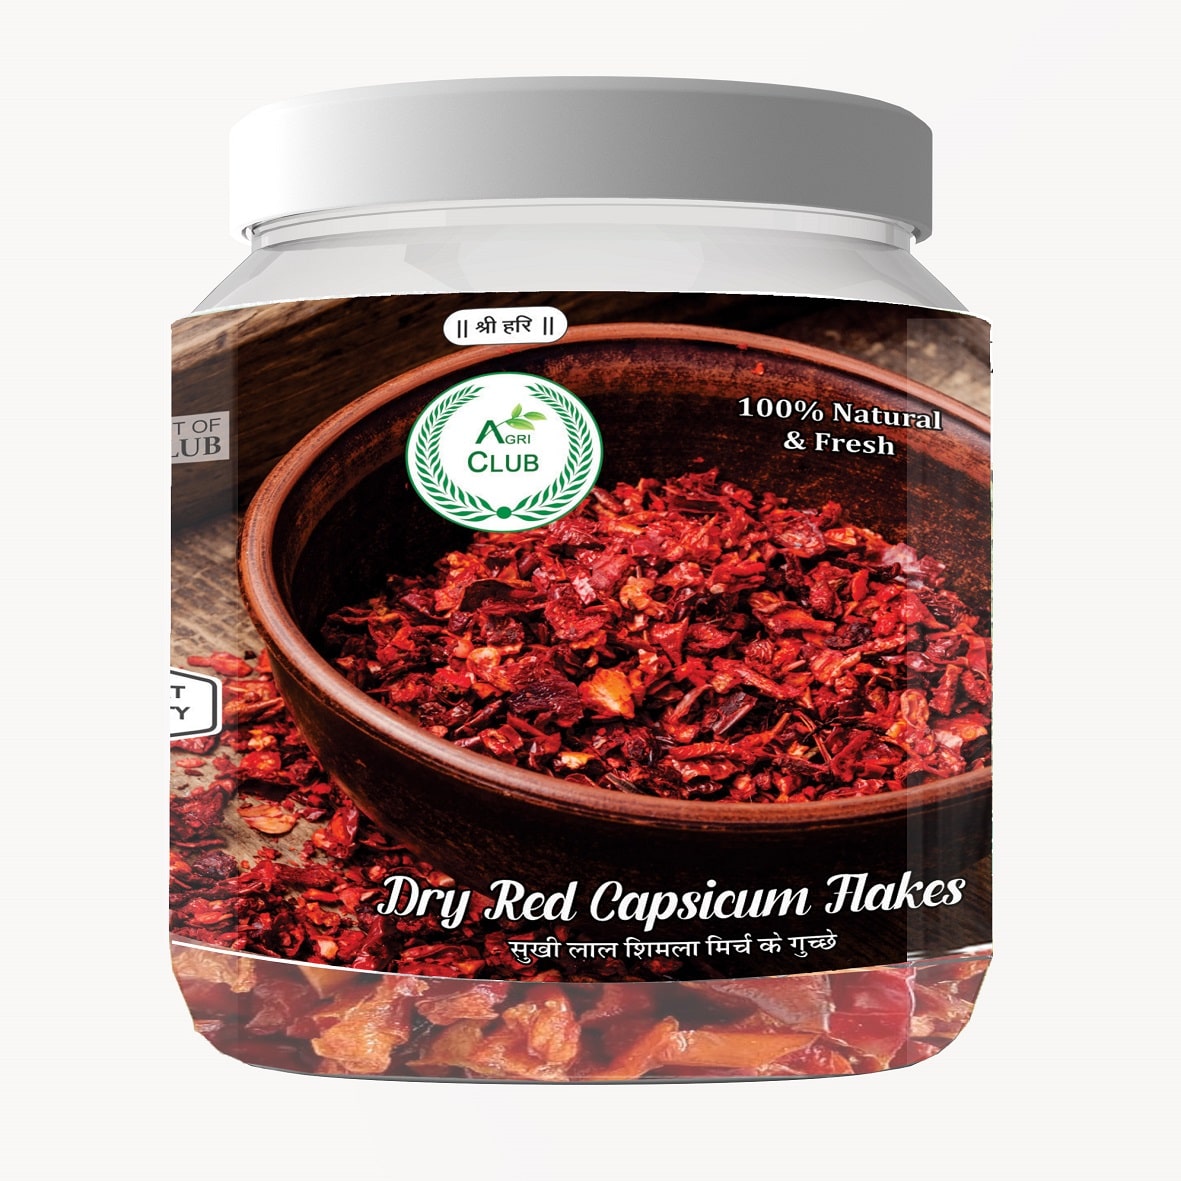 Dry Red Capsicum Flakes 100% Natural